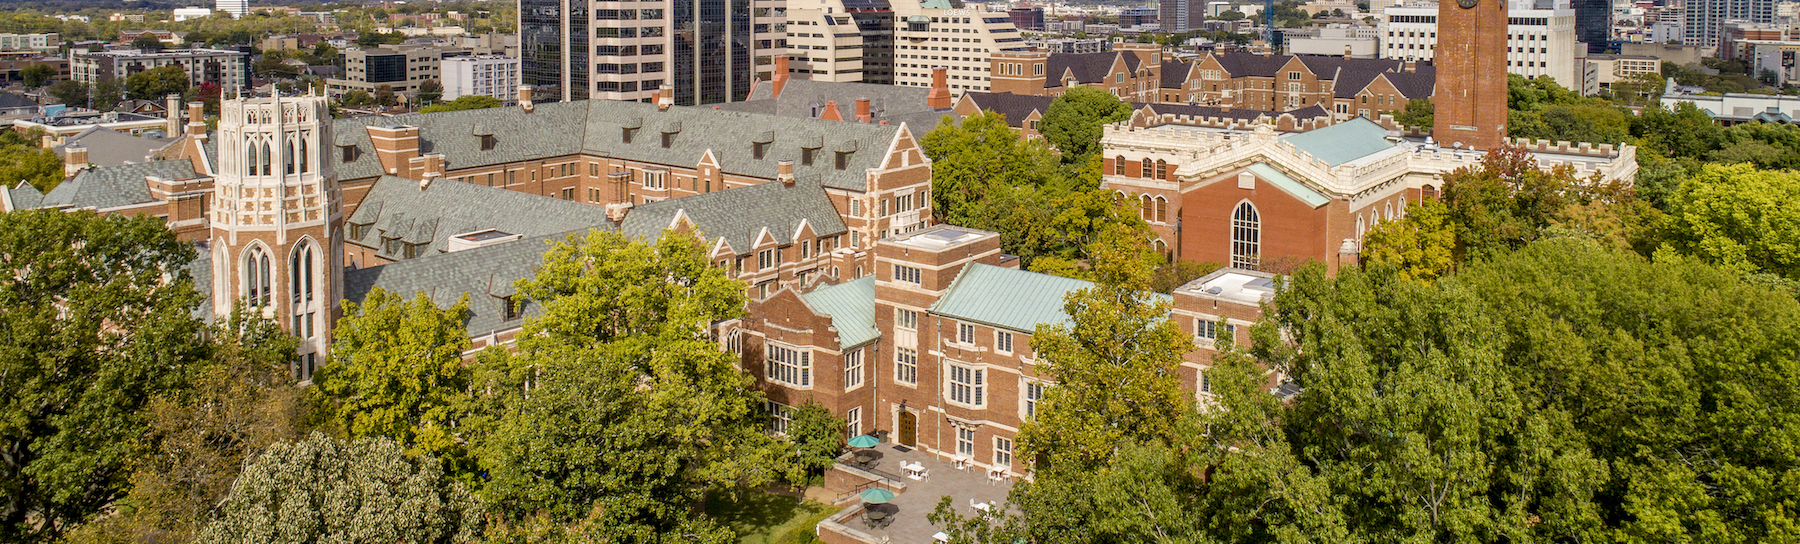 Aerial drone image of campus